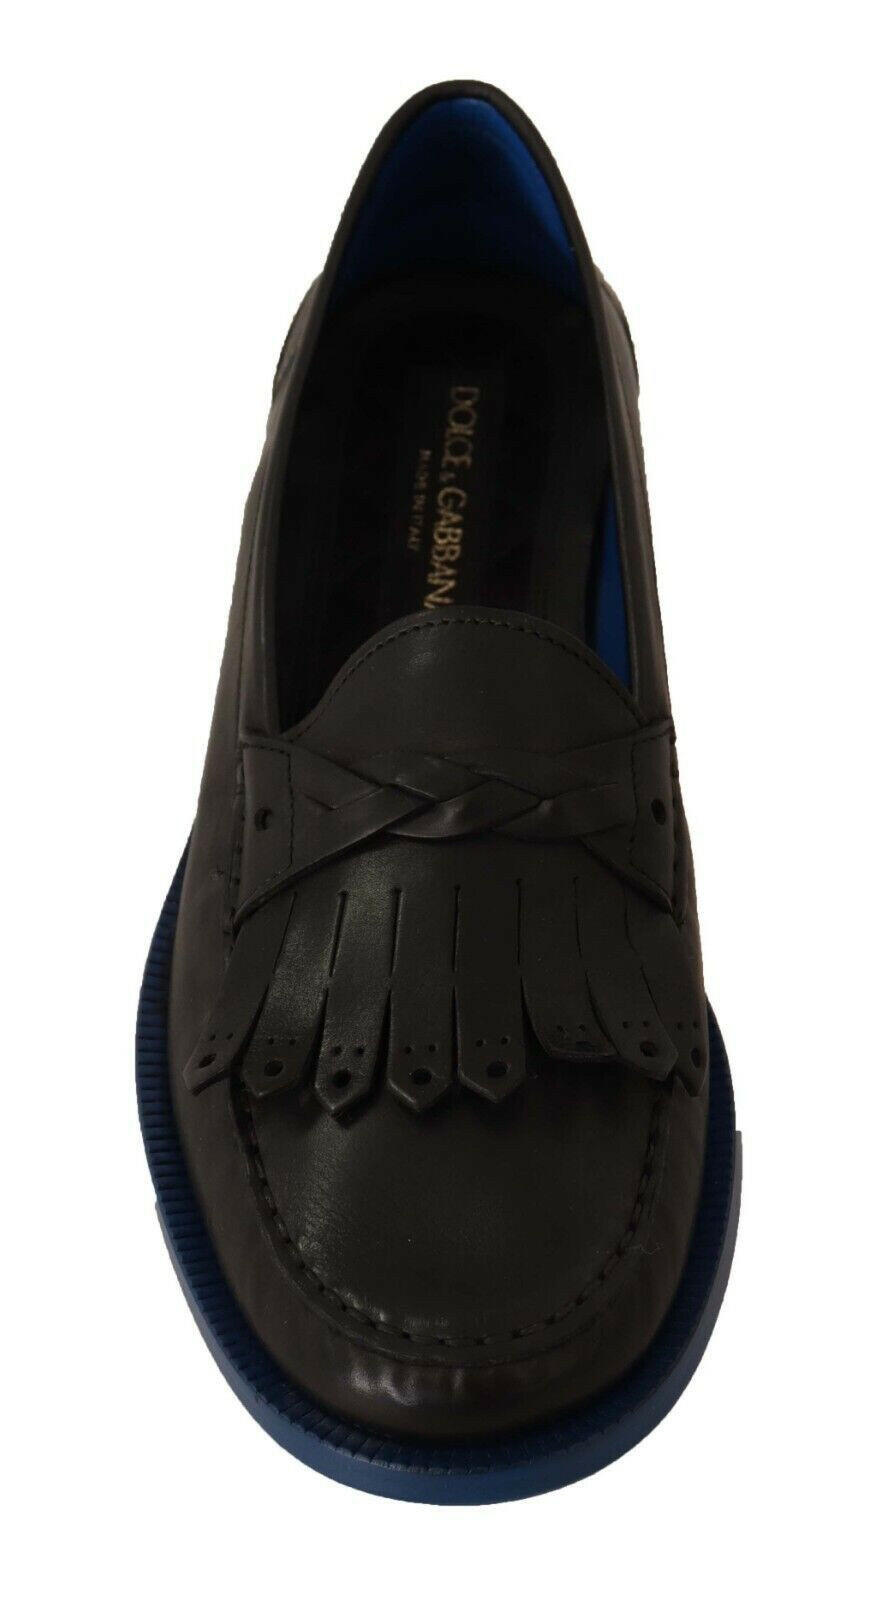 Dolce & Gabbana Black Leather Tassel Slip On Loafers Shoes - GENUINE AUTHENTIC BRAND LLC  